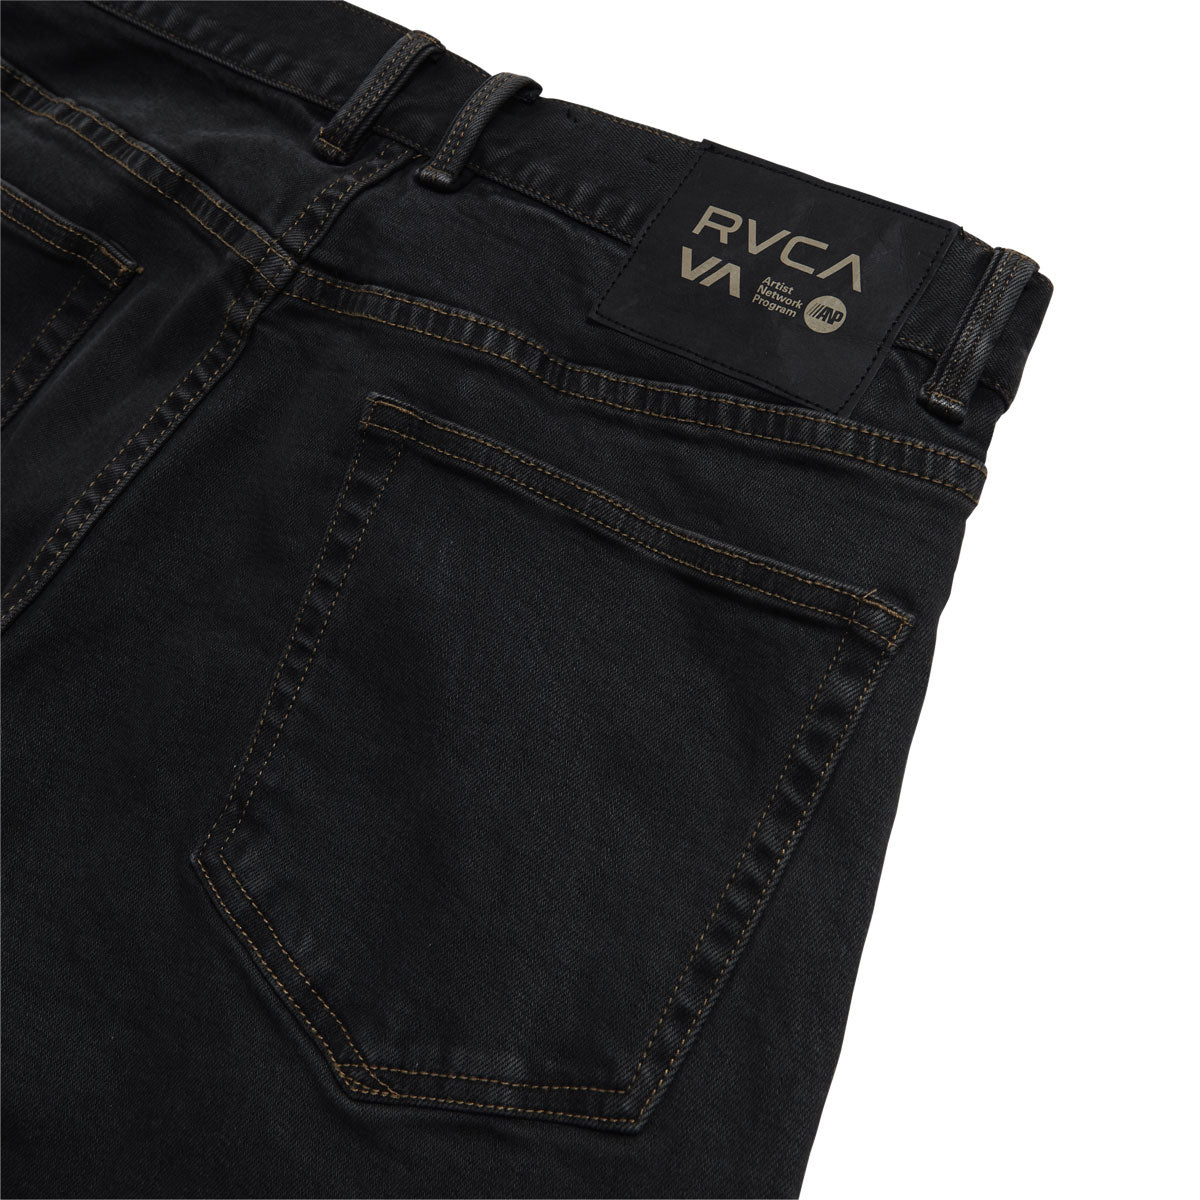 RVCA Weekend Anp Denim Jeans - Black Overdye image 4